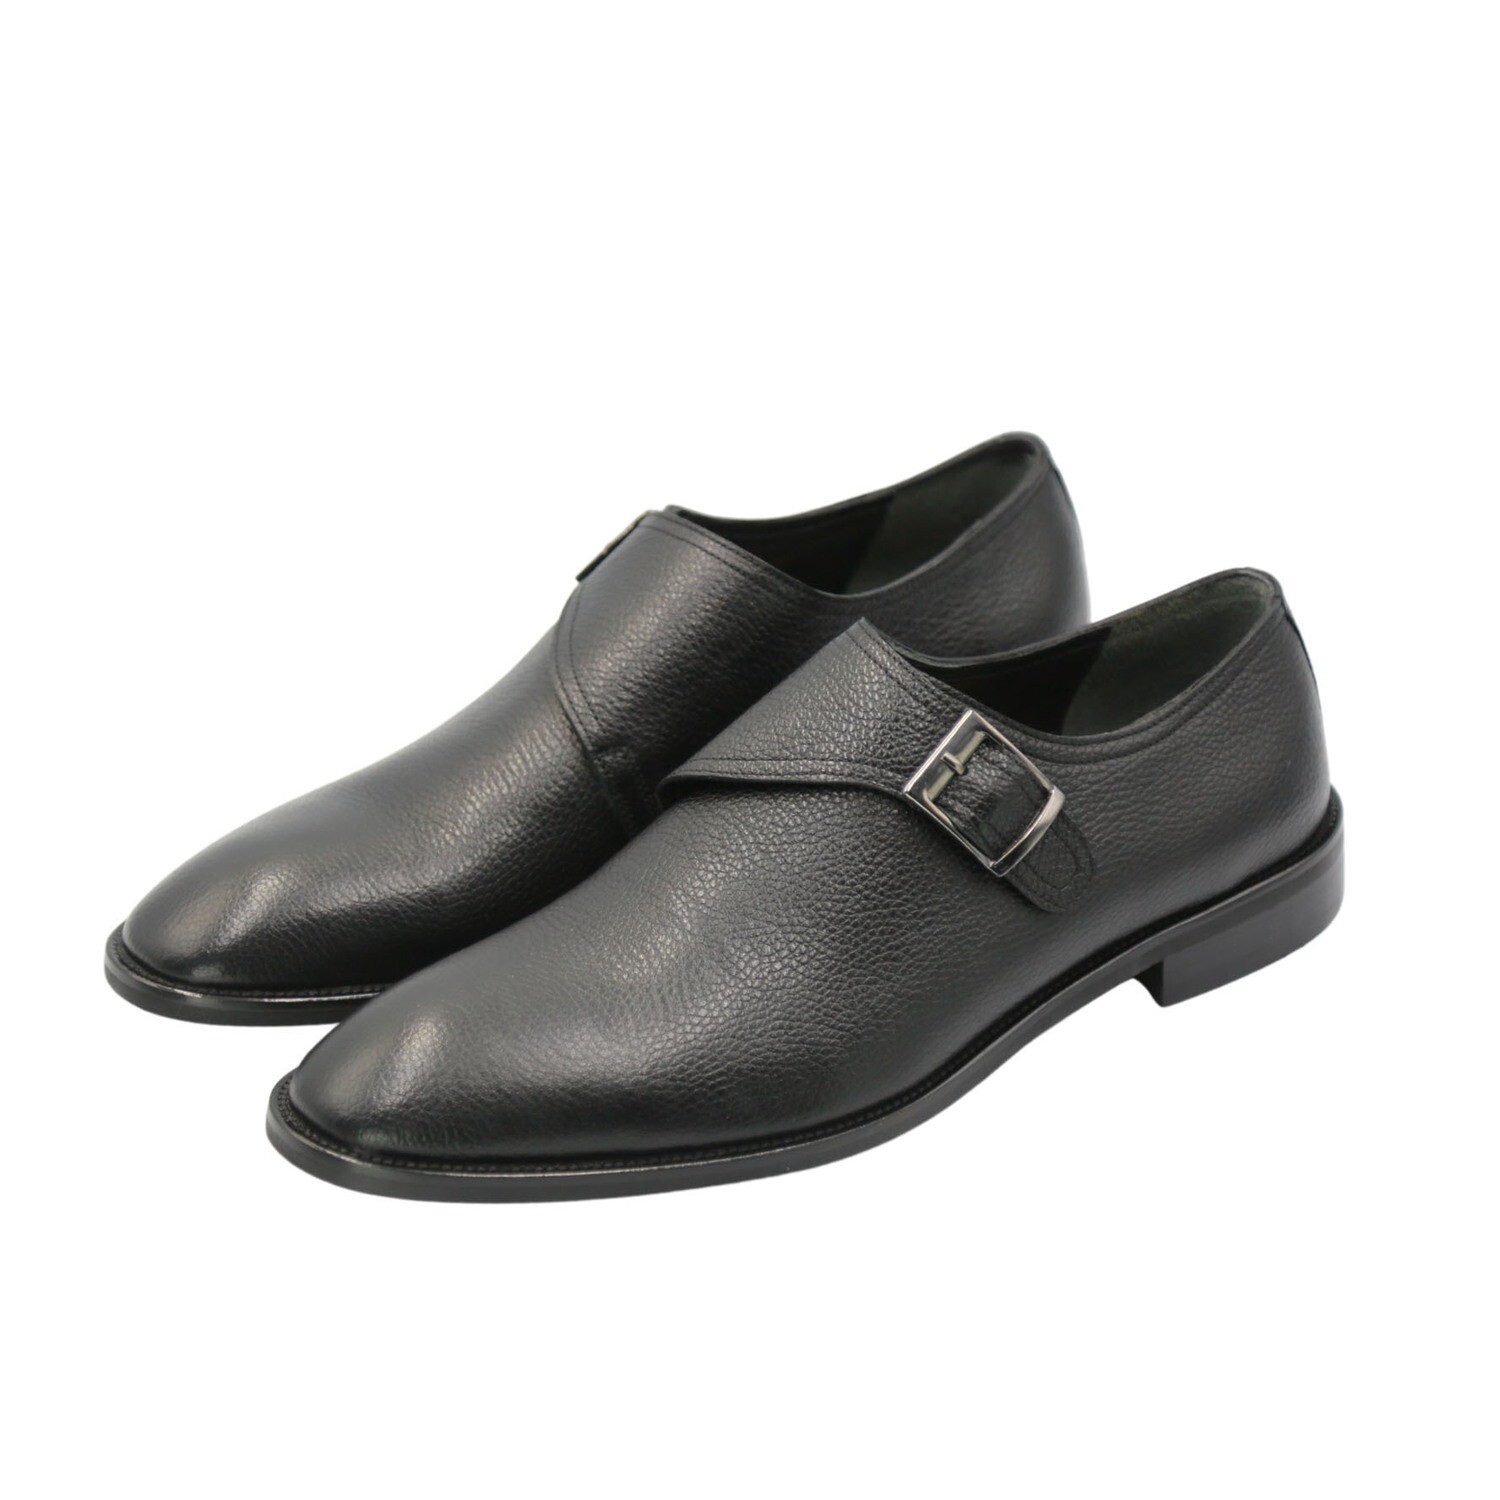 Men's Formal Leather Shoe